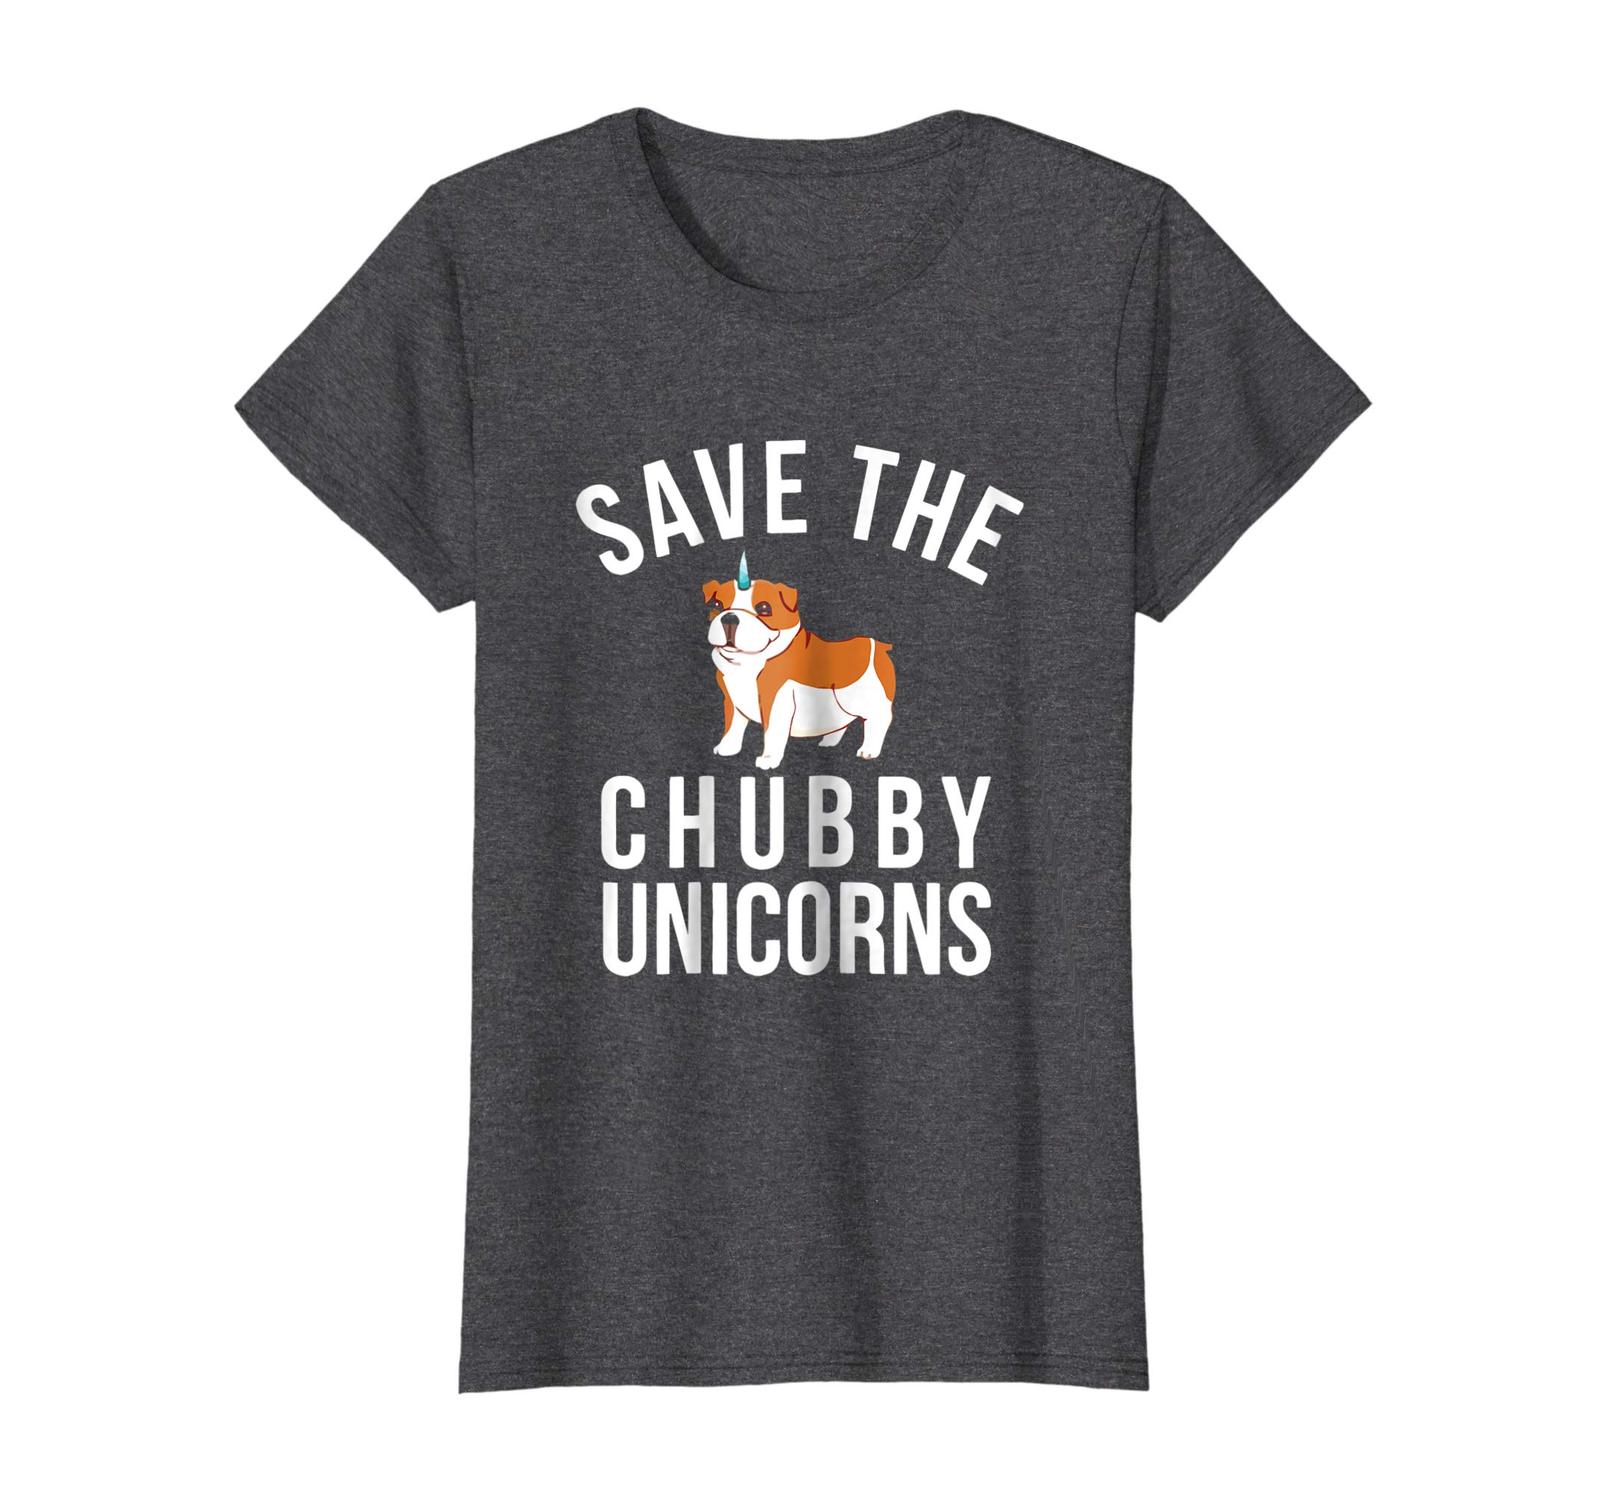 Dog Fashion - Save The Chubby Unicorns T-shirt English Bulldog Shirt Wowen